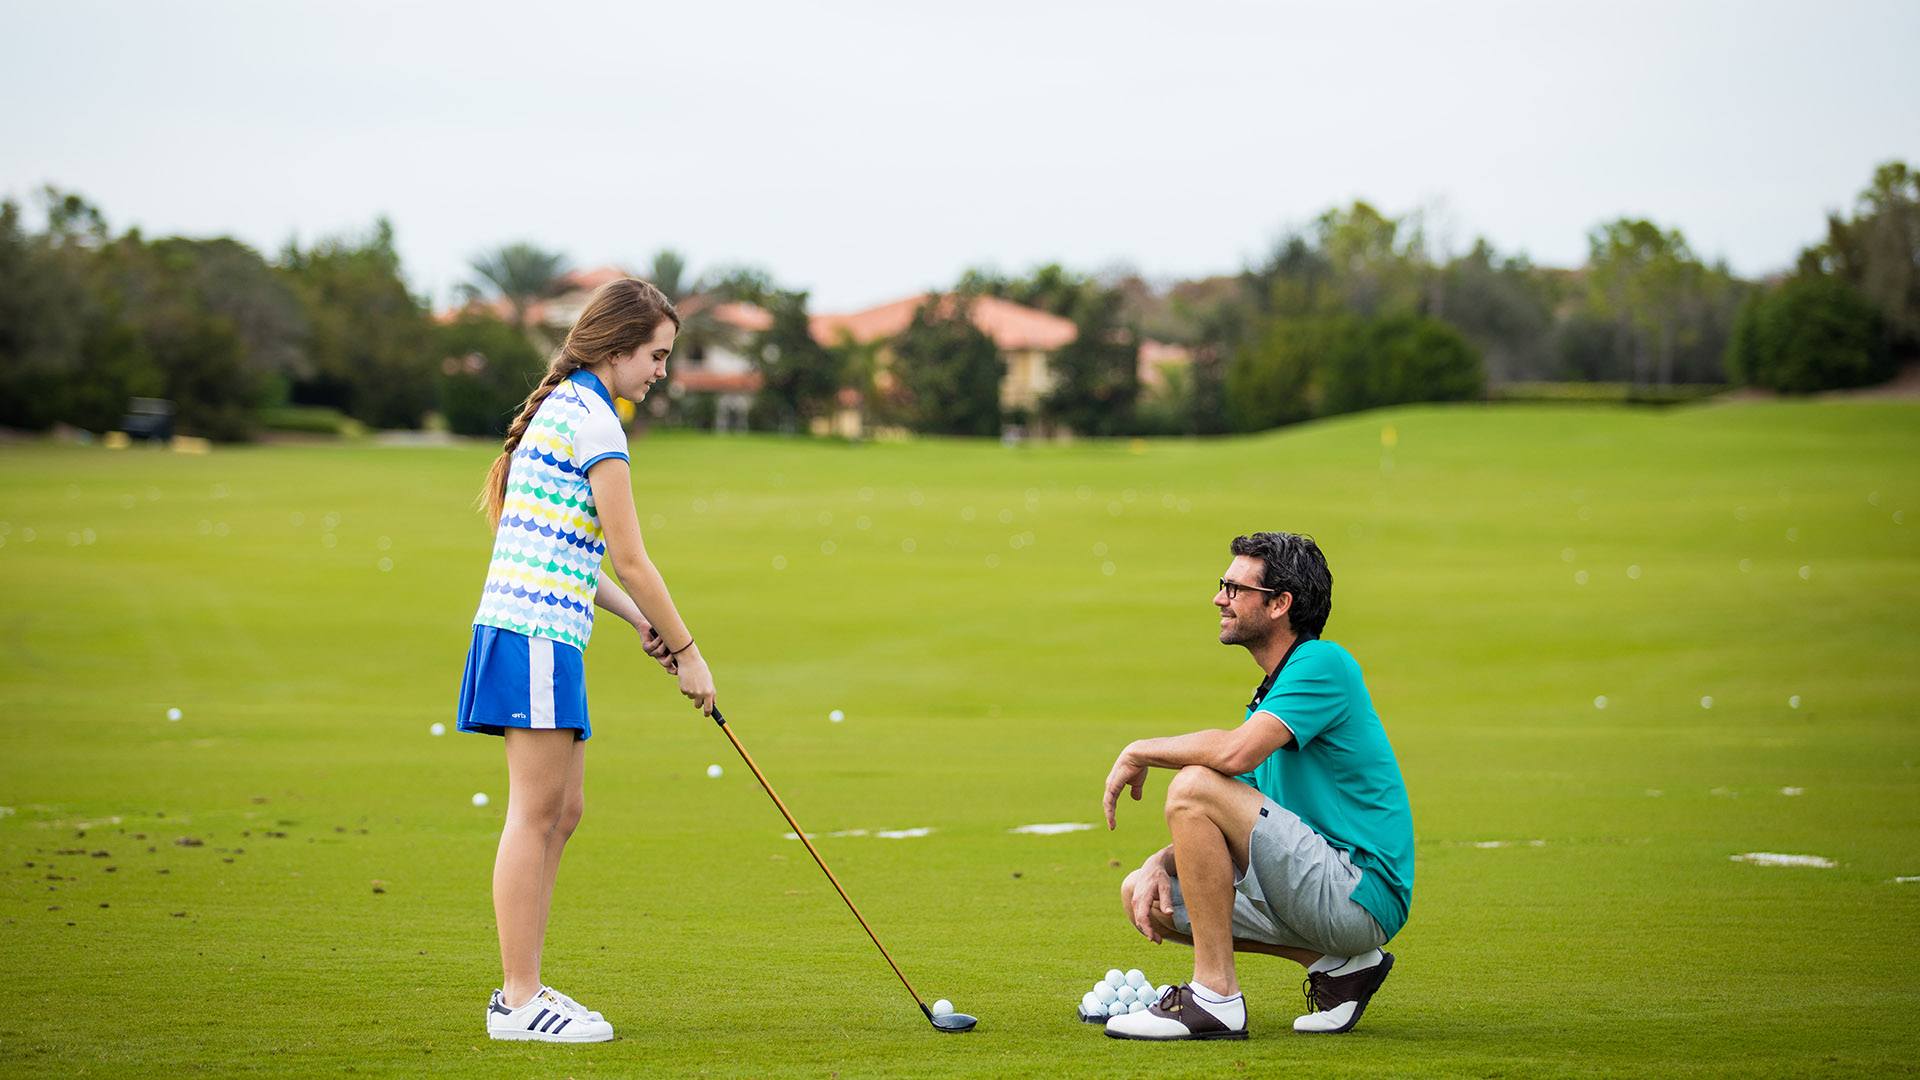 Man and girl golfing